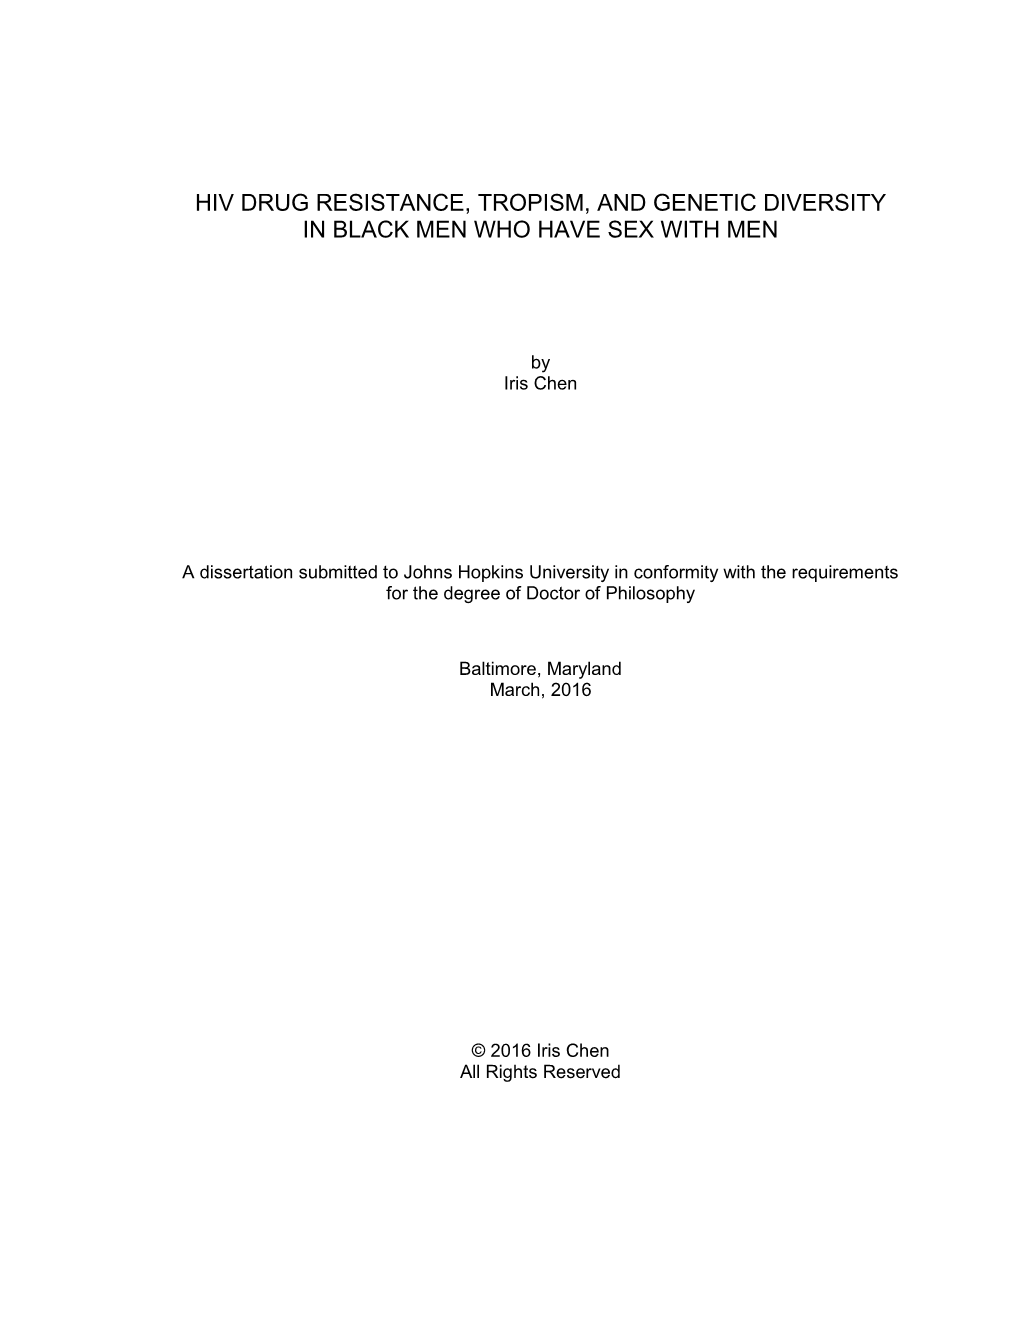 Hiv Drug Resistance, Tropism, and Genetic Diversity in Black Men Who Have Sex with Men